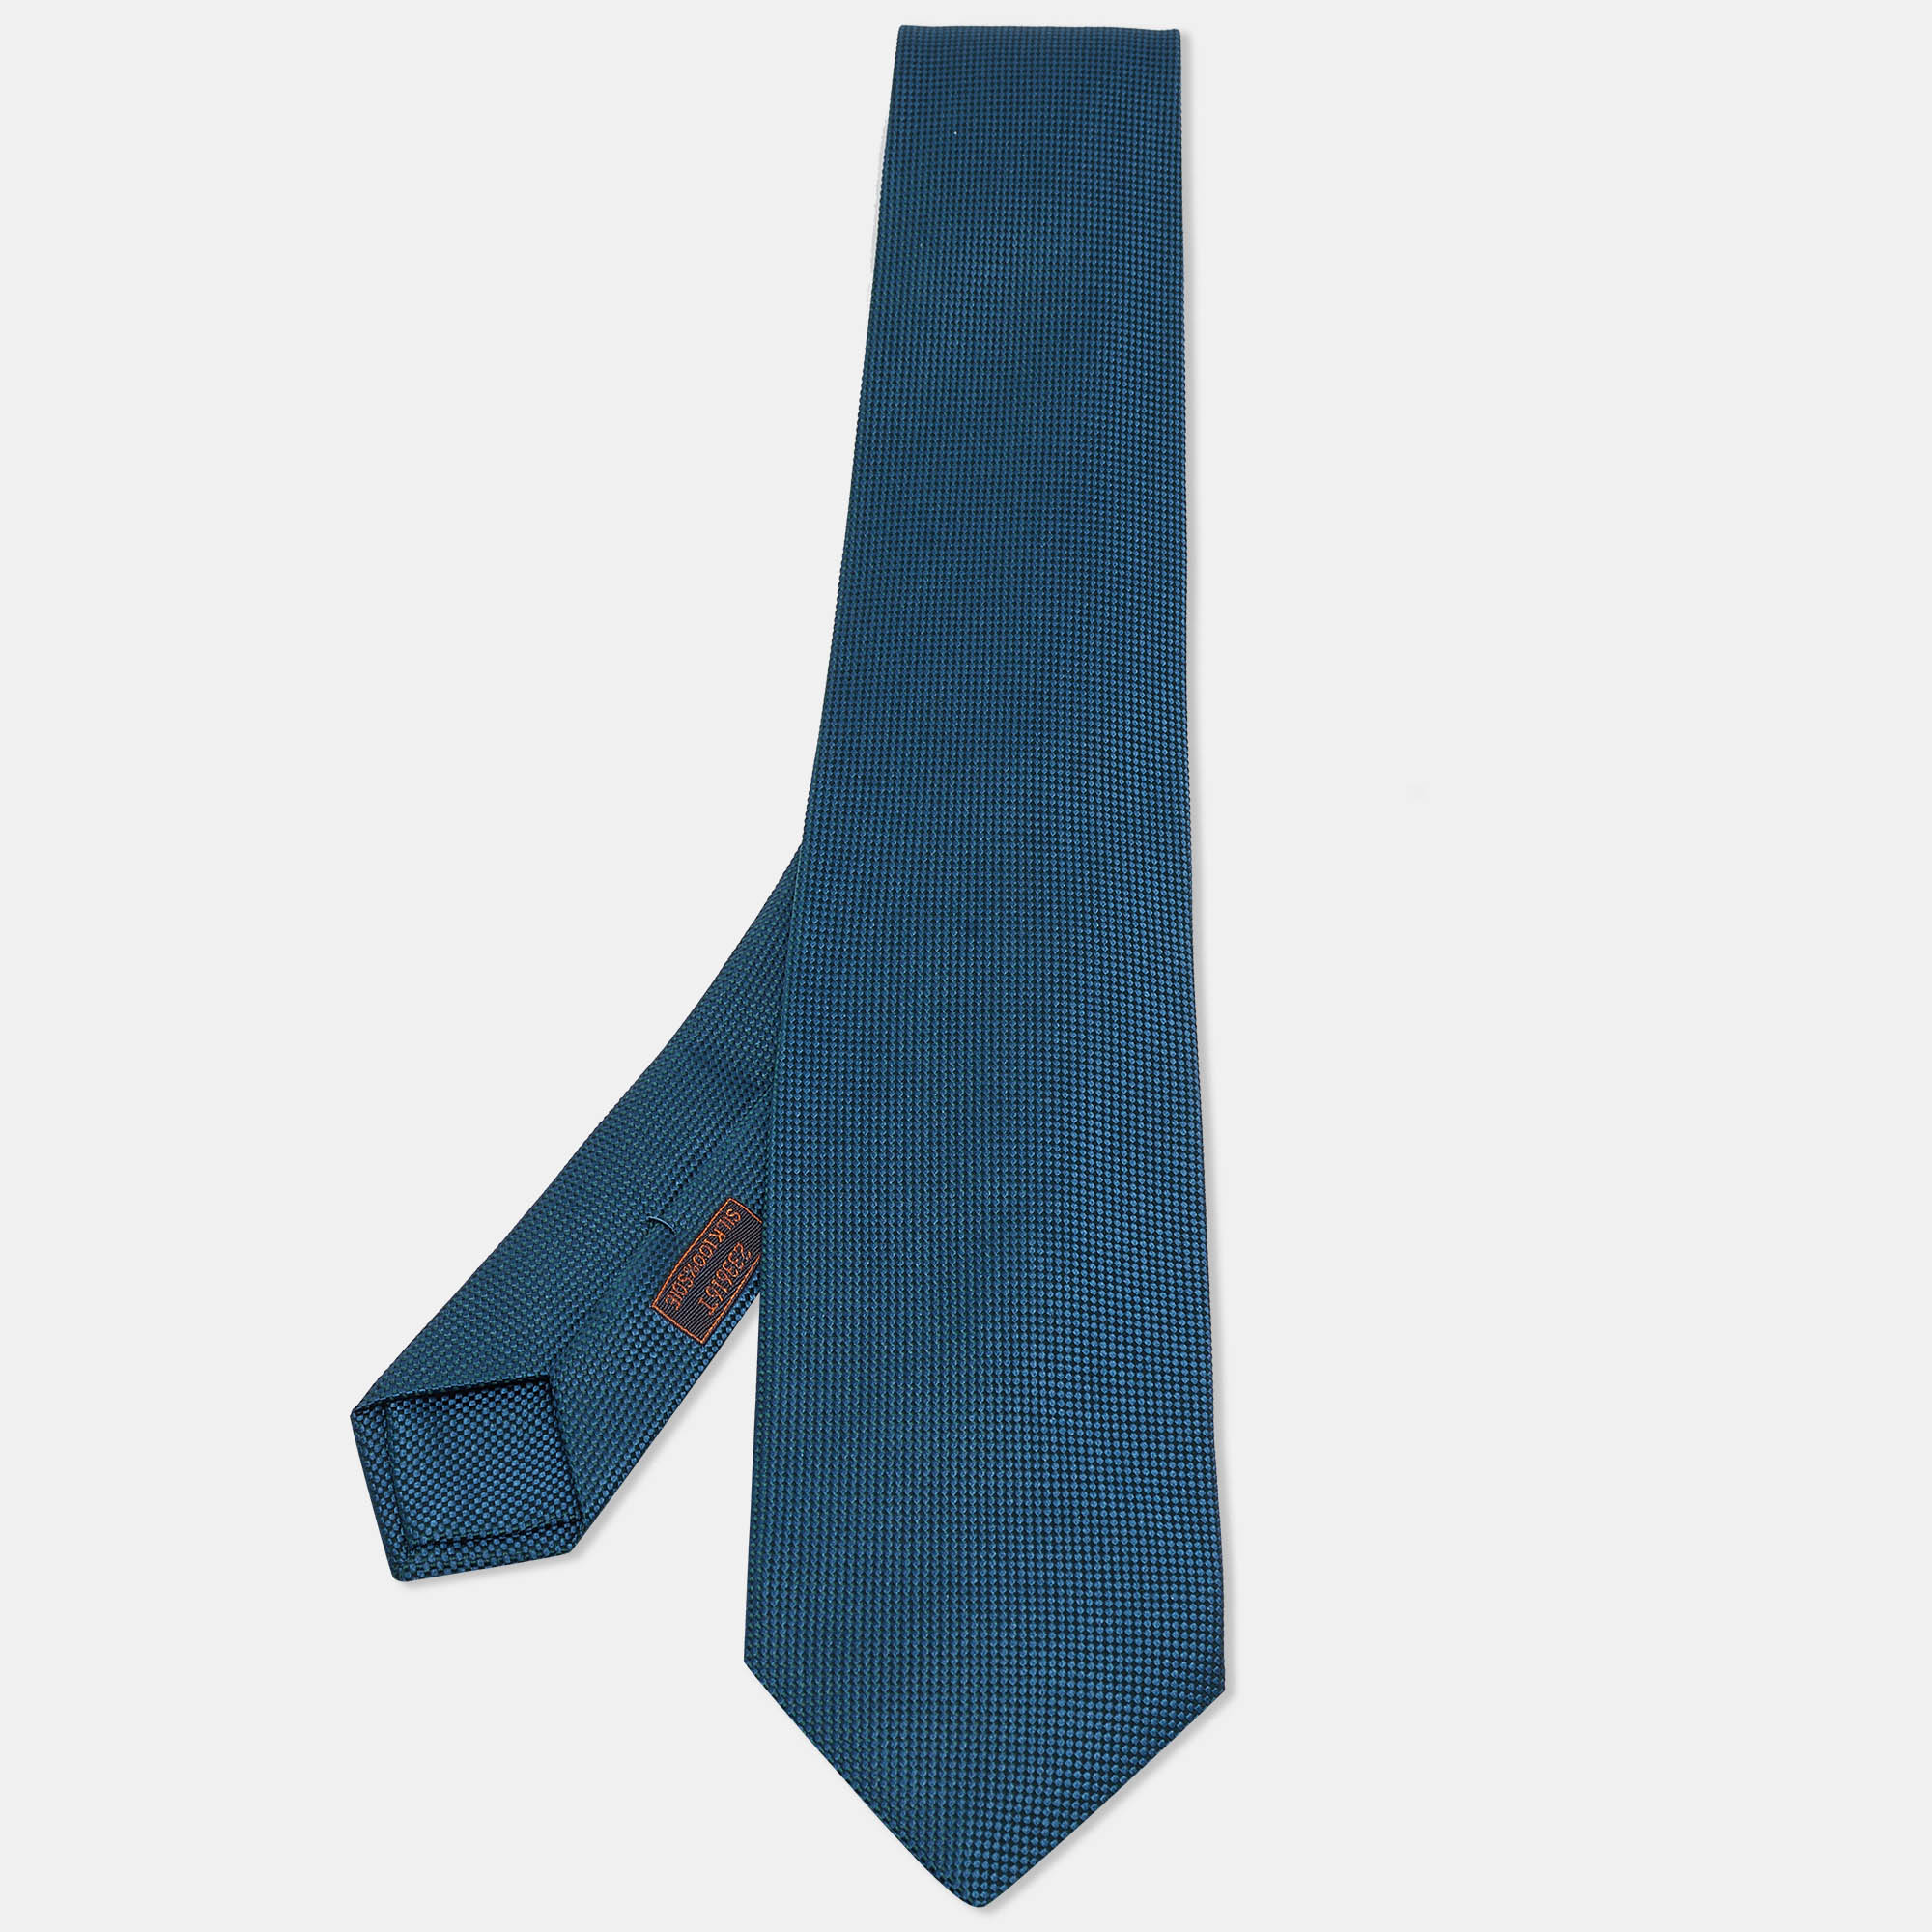 Hermes herm&egrave;s blue patterned silk tie